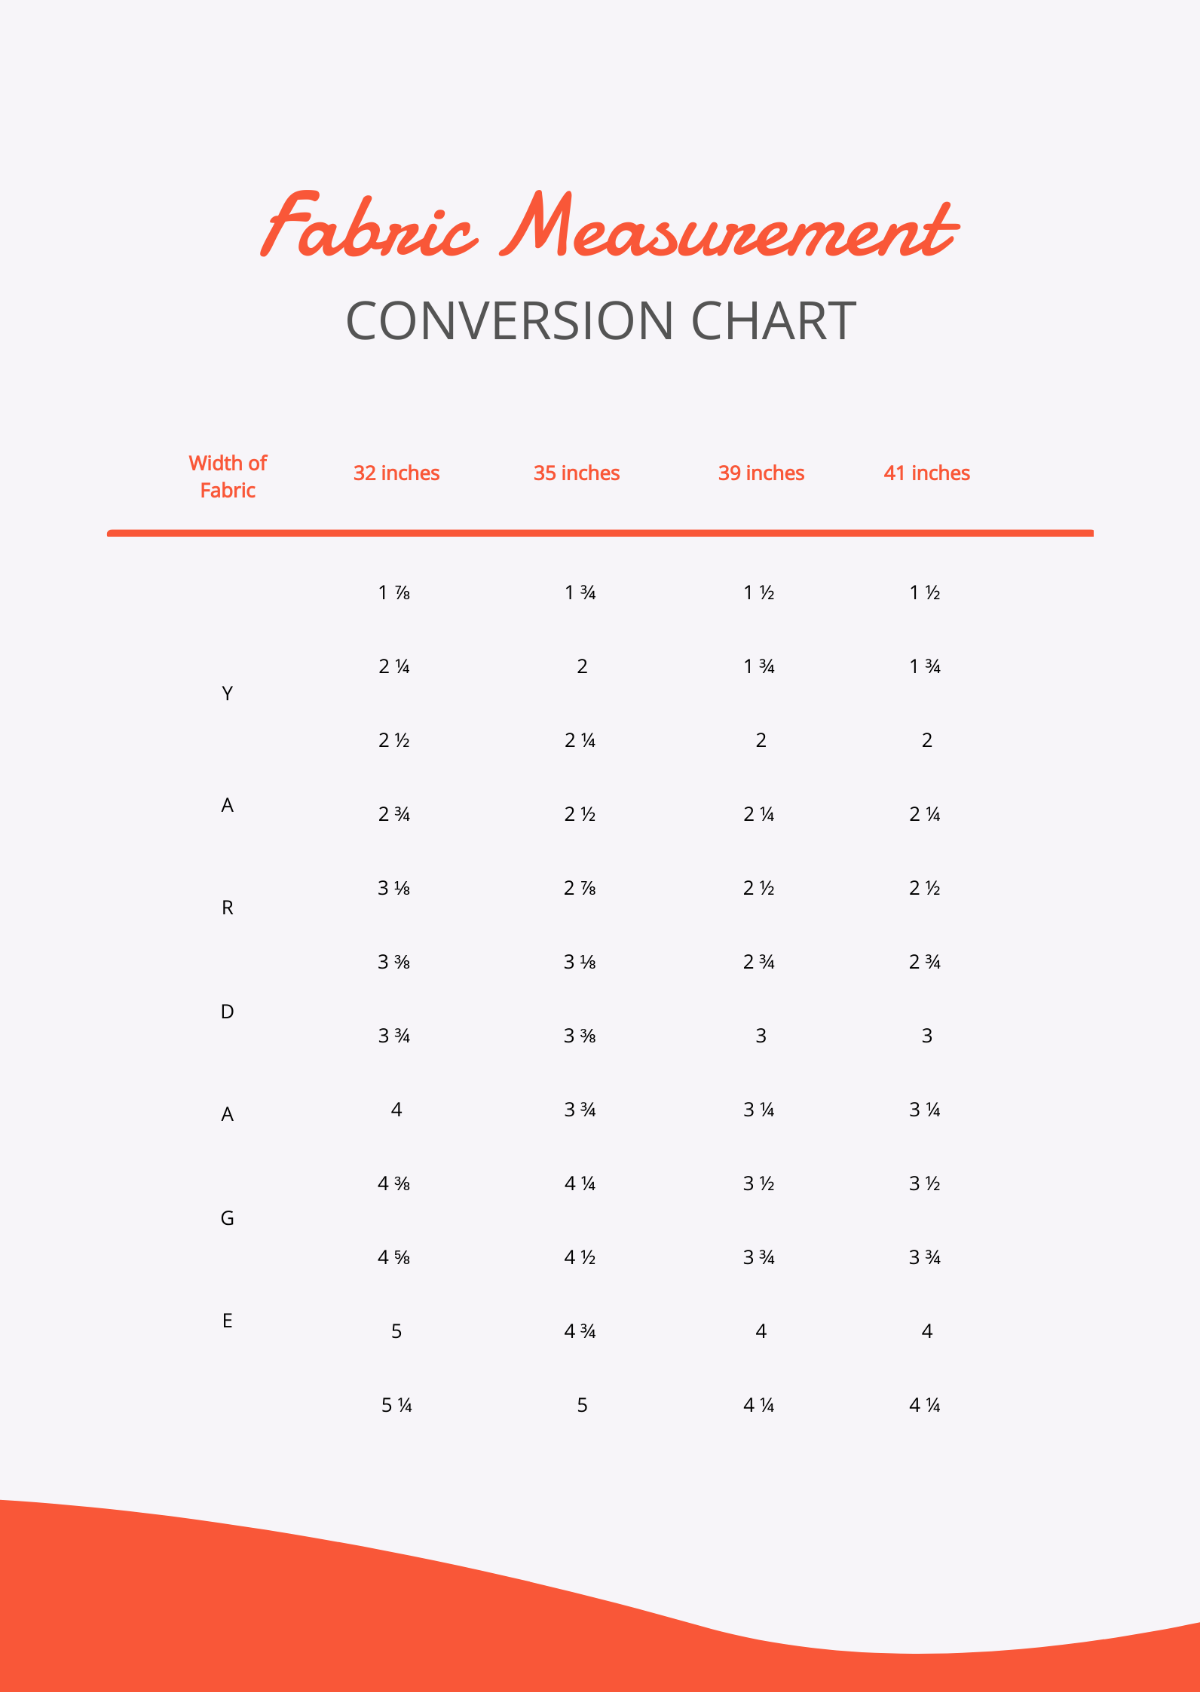 Fabric Measurement Conversion Chart Template